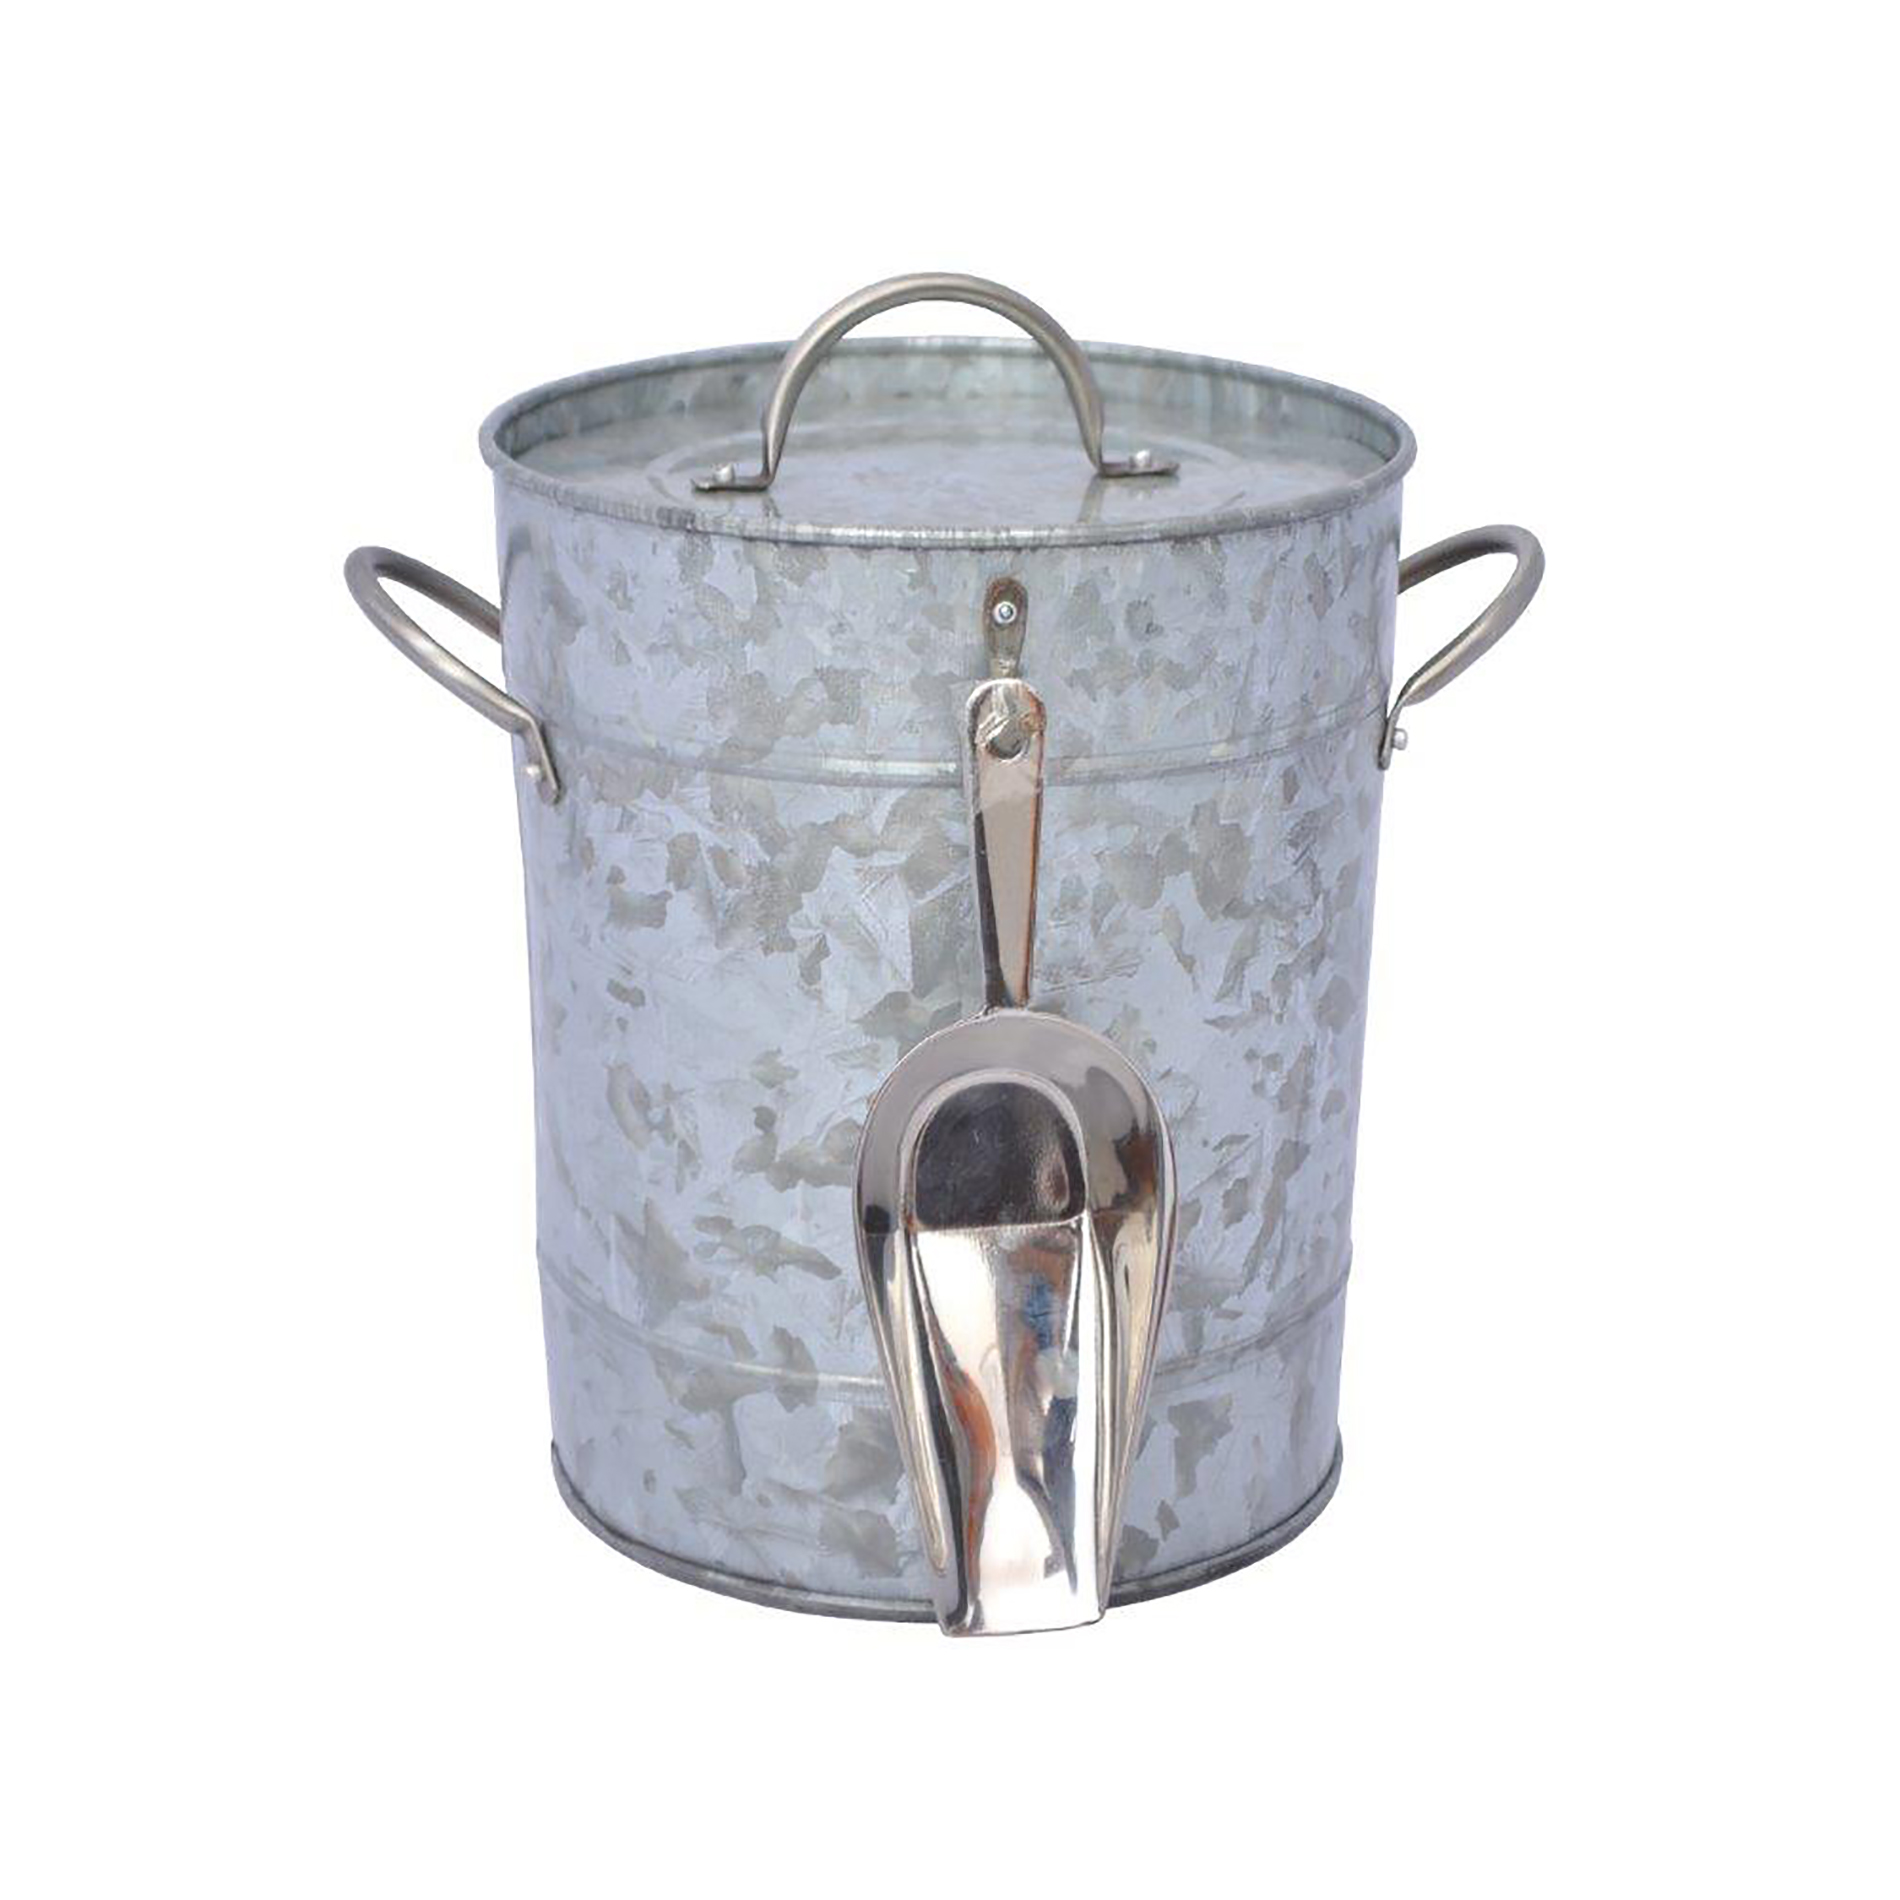 Essential Home Galvanized Steel Ice Bucket with Scoop